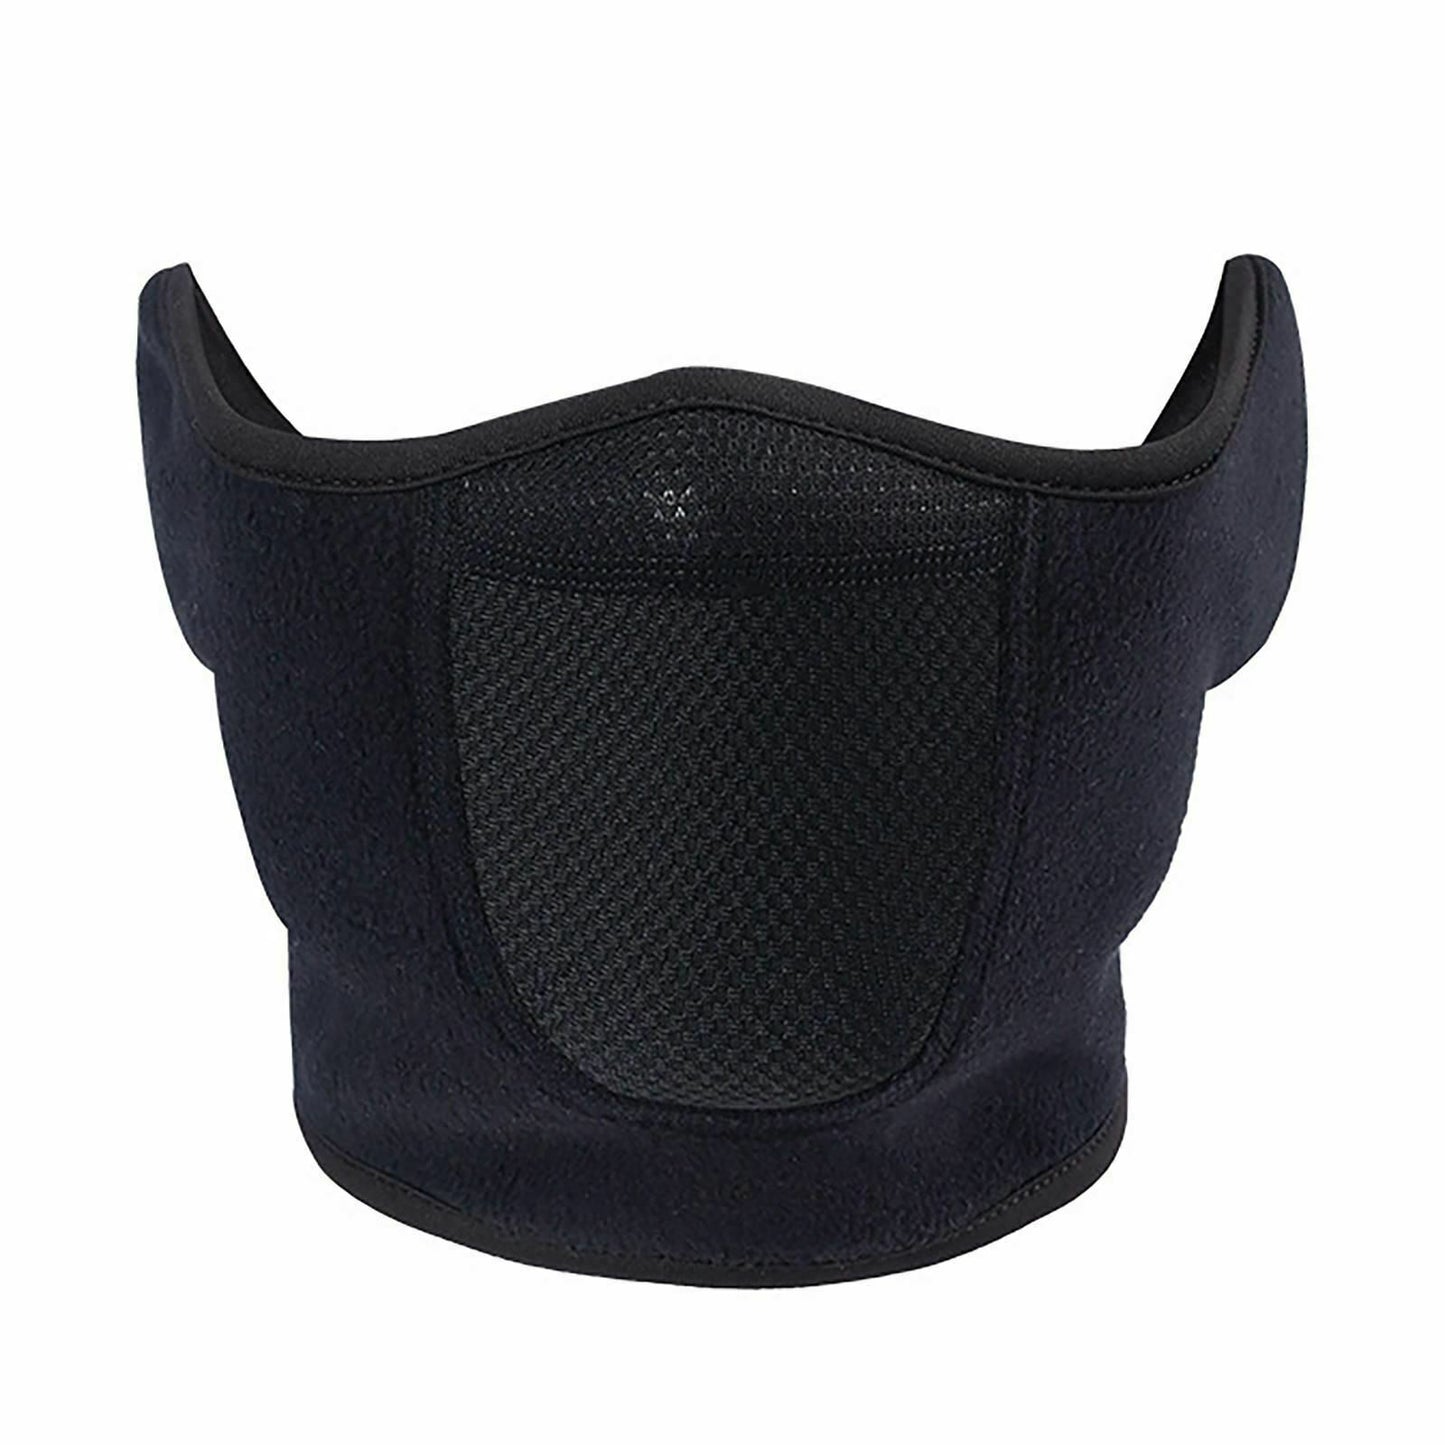 Unisex Protective Face Mask - Mouth Masks - Washable, Reusable & Durable